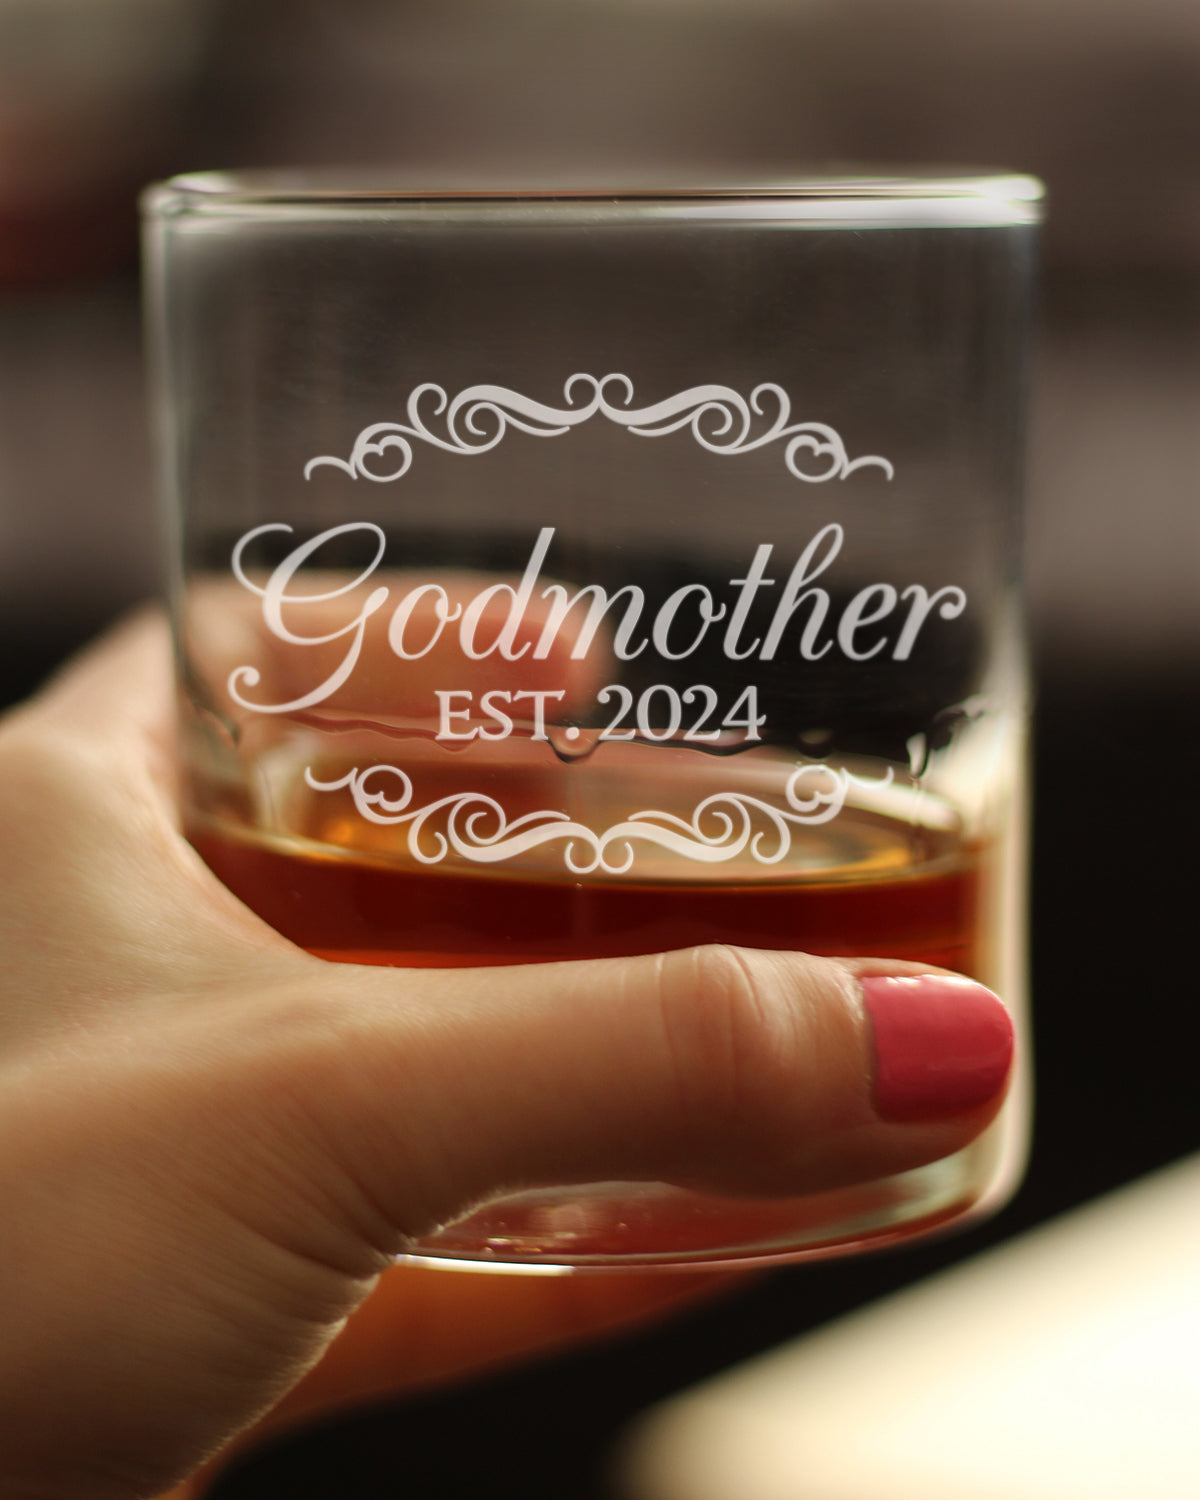 Godmother Est 2024 - New Godmother Whiskey Rocks Glass Proposal Gift for First Time Godparents - Decorative 10.25 Oz Glasses